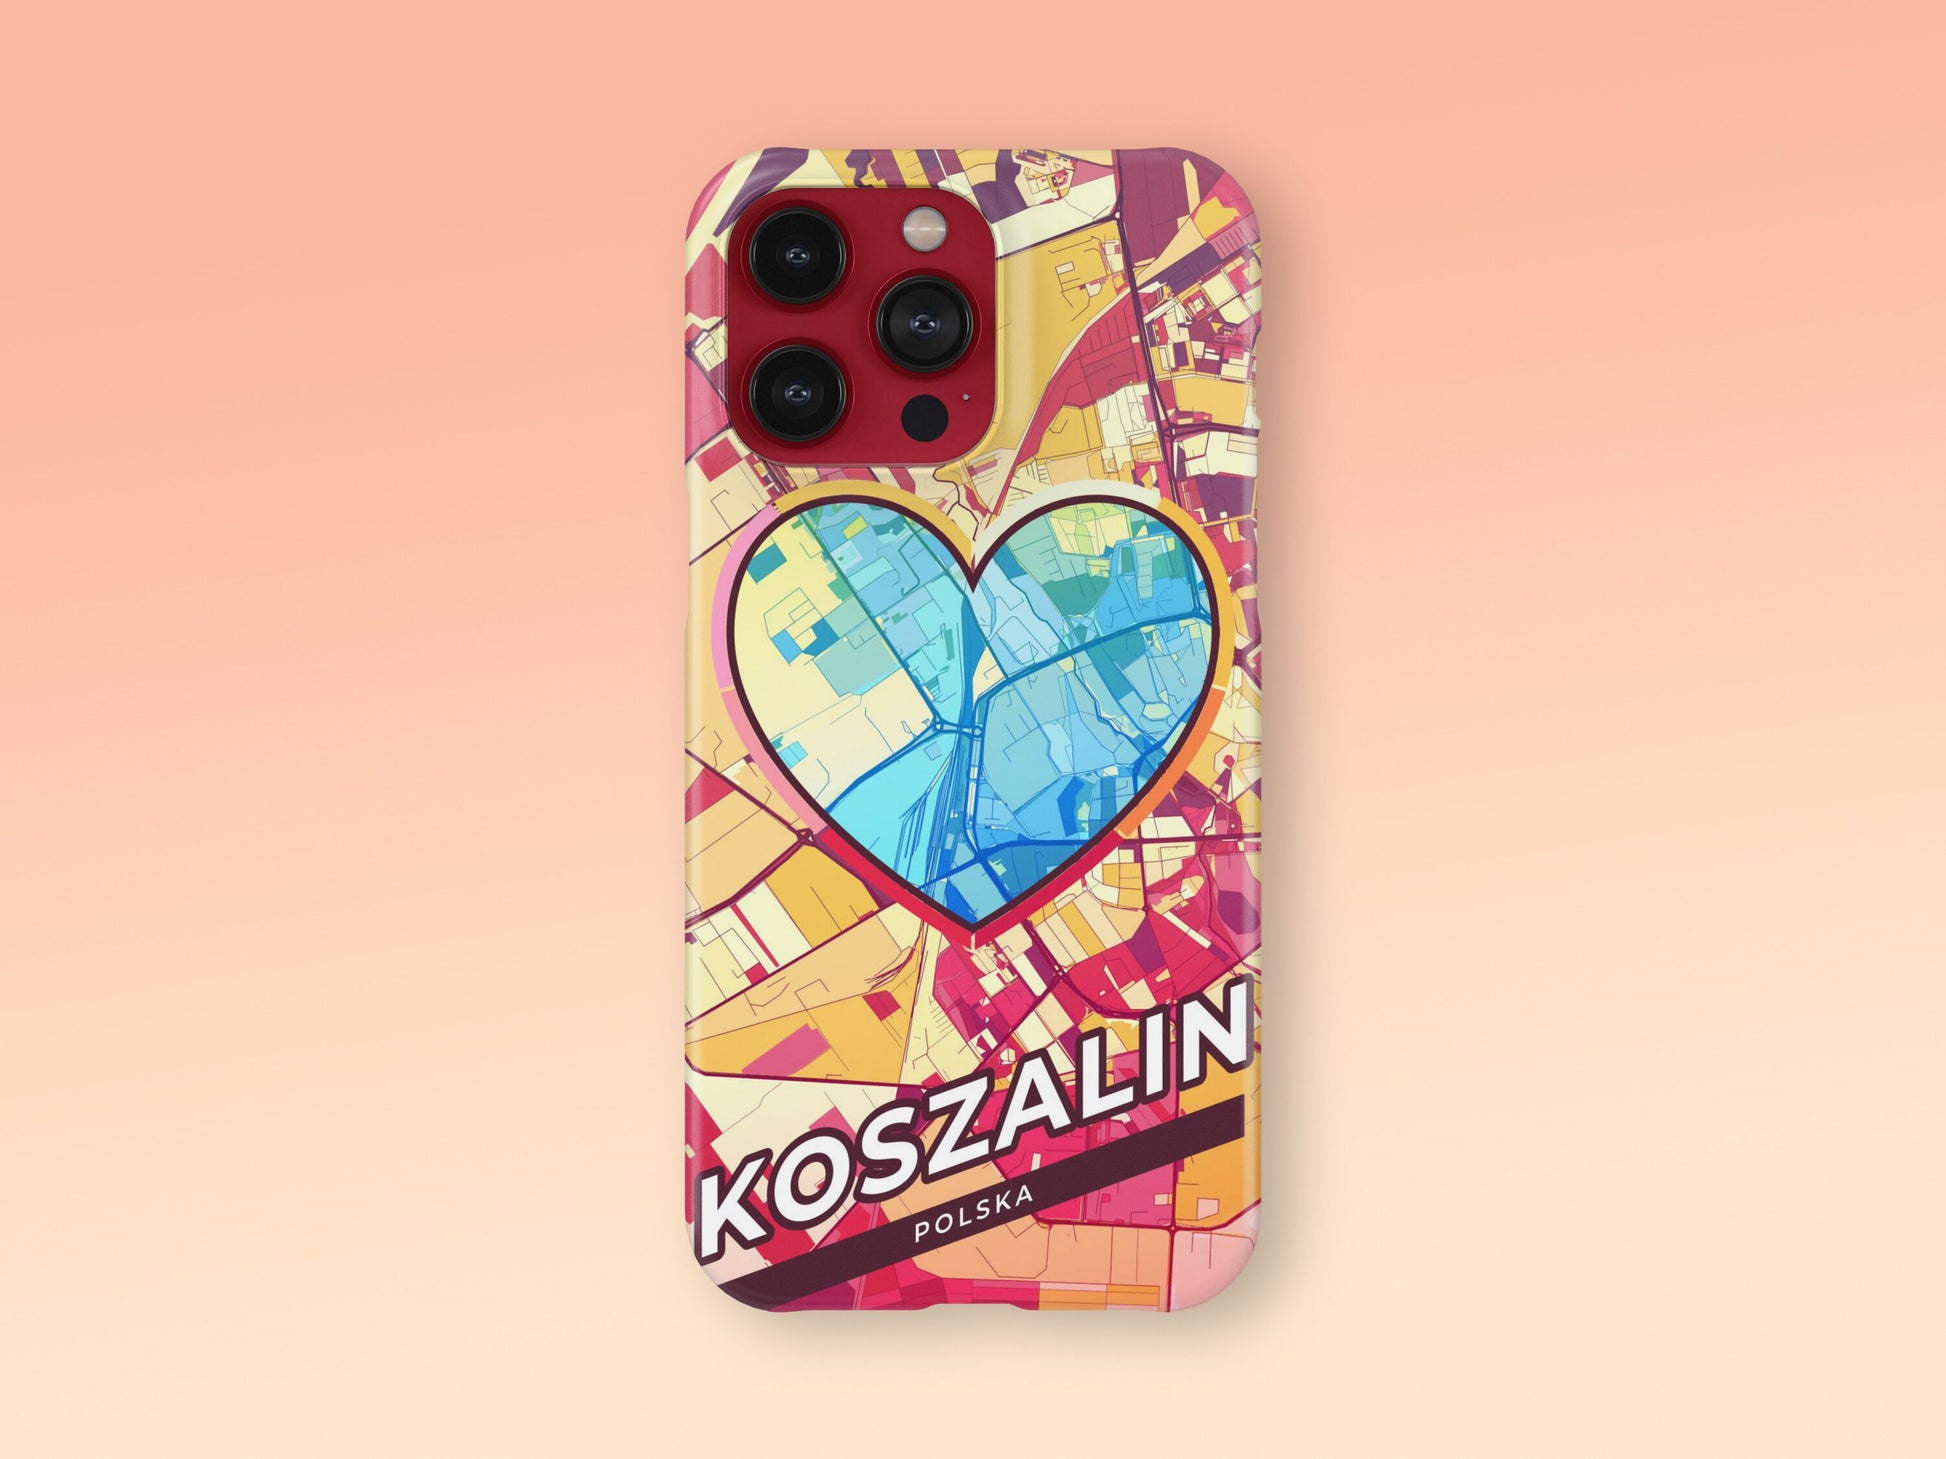 Koszalin Poland slim phone case with colorful icon. Birthday, wedding or housewarming gift. Couple match cases. 2